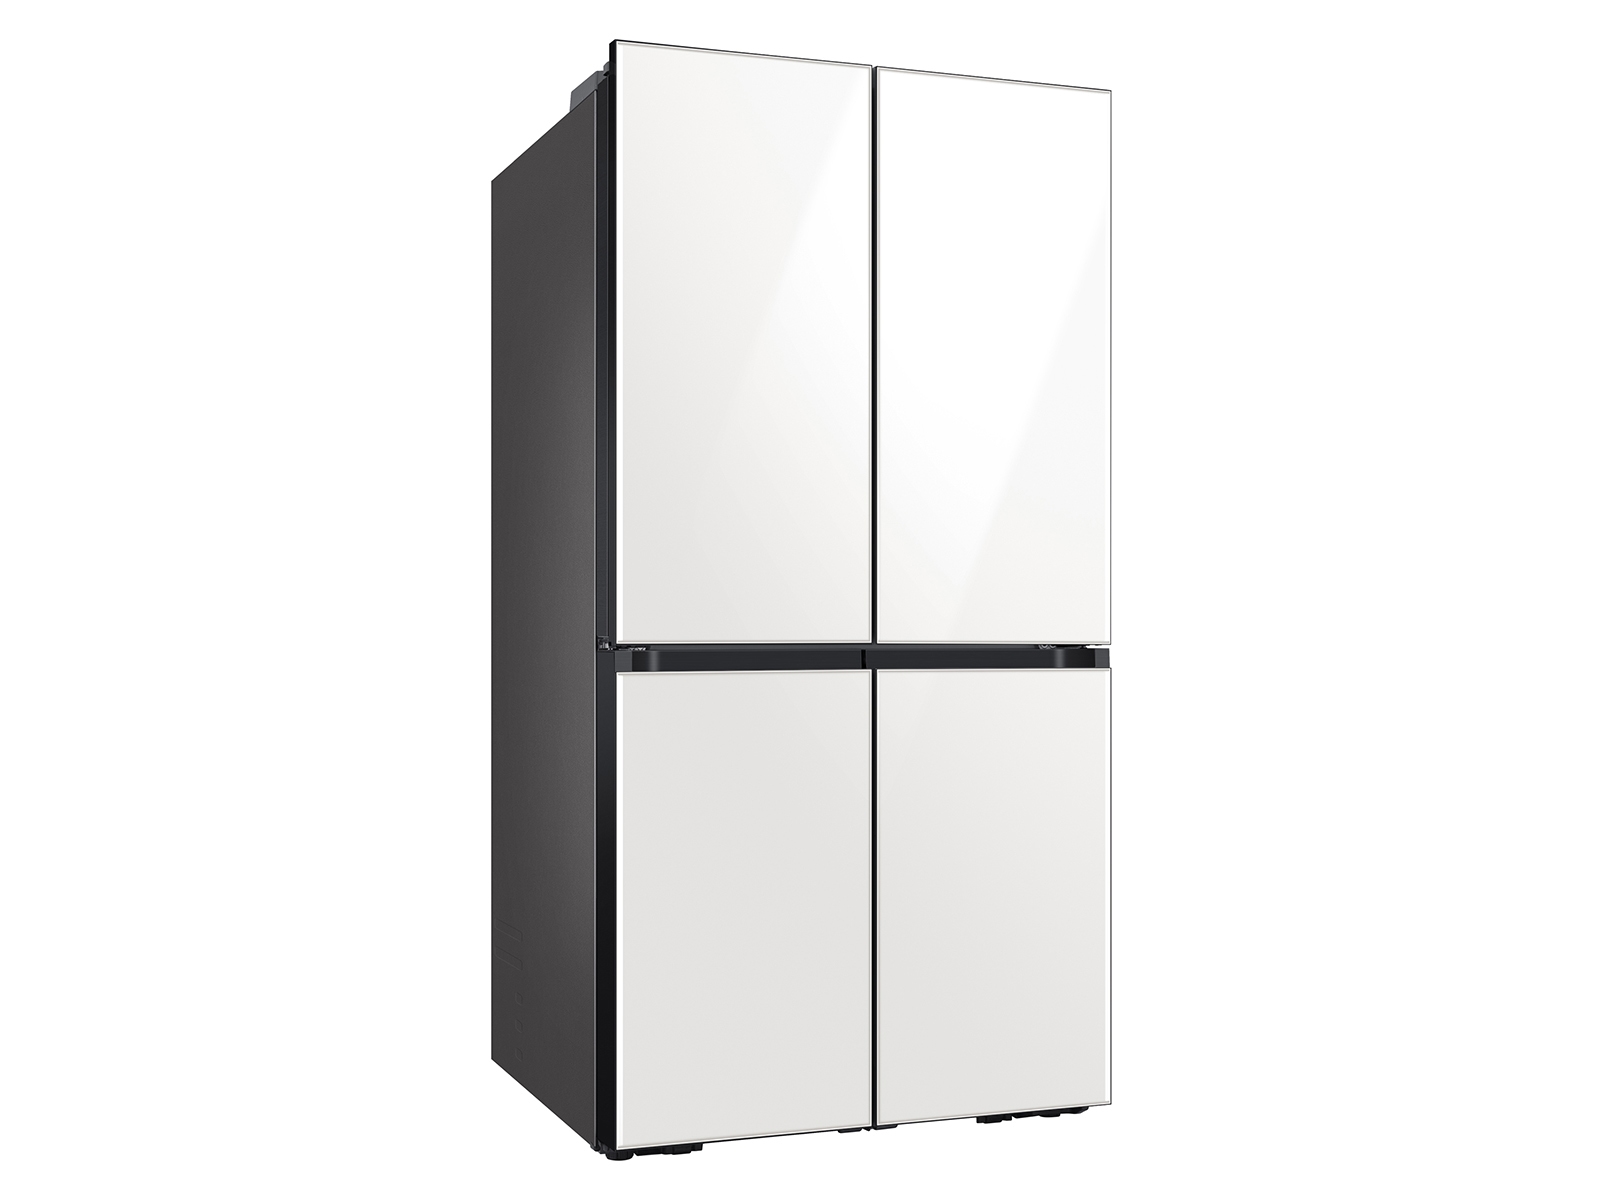 Thumbnail image of Bespoke 4-Door Flex™ Refrigerator (23 cu. ft.) in Morning Blue Glass